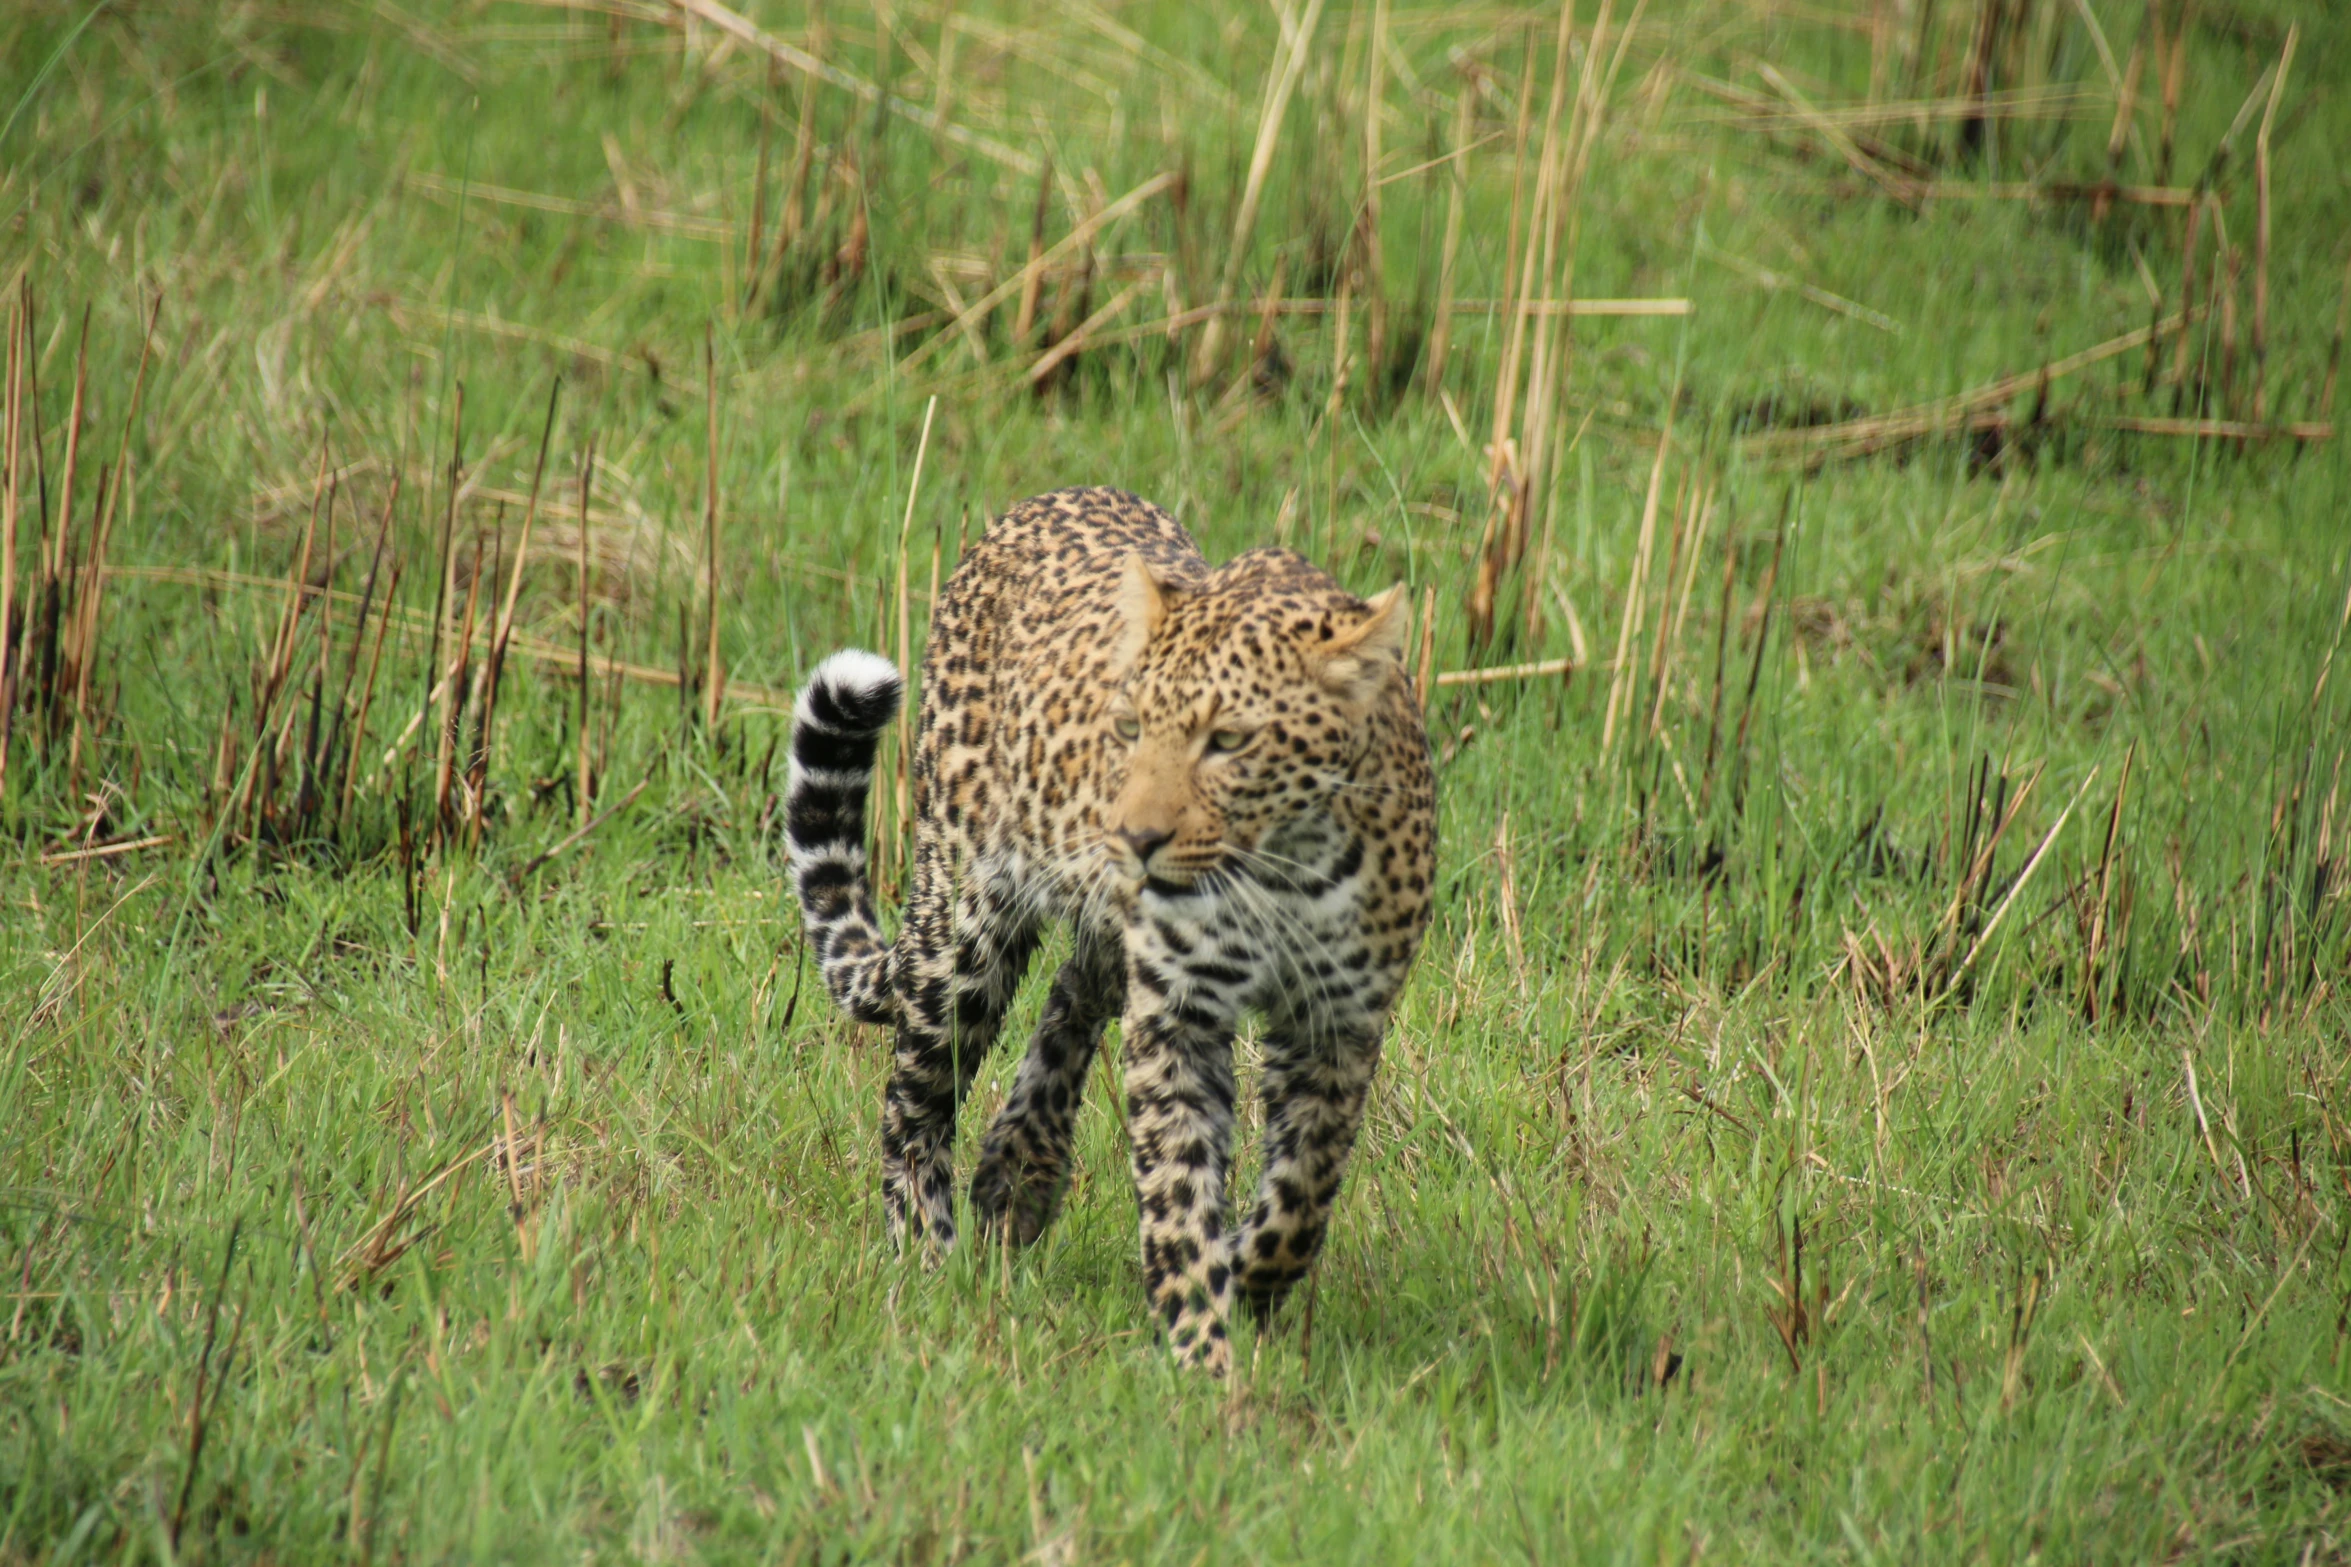 a cheetah cub walking in a field of grass